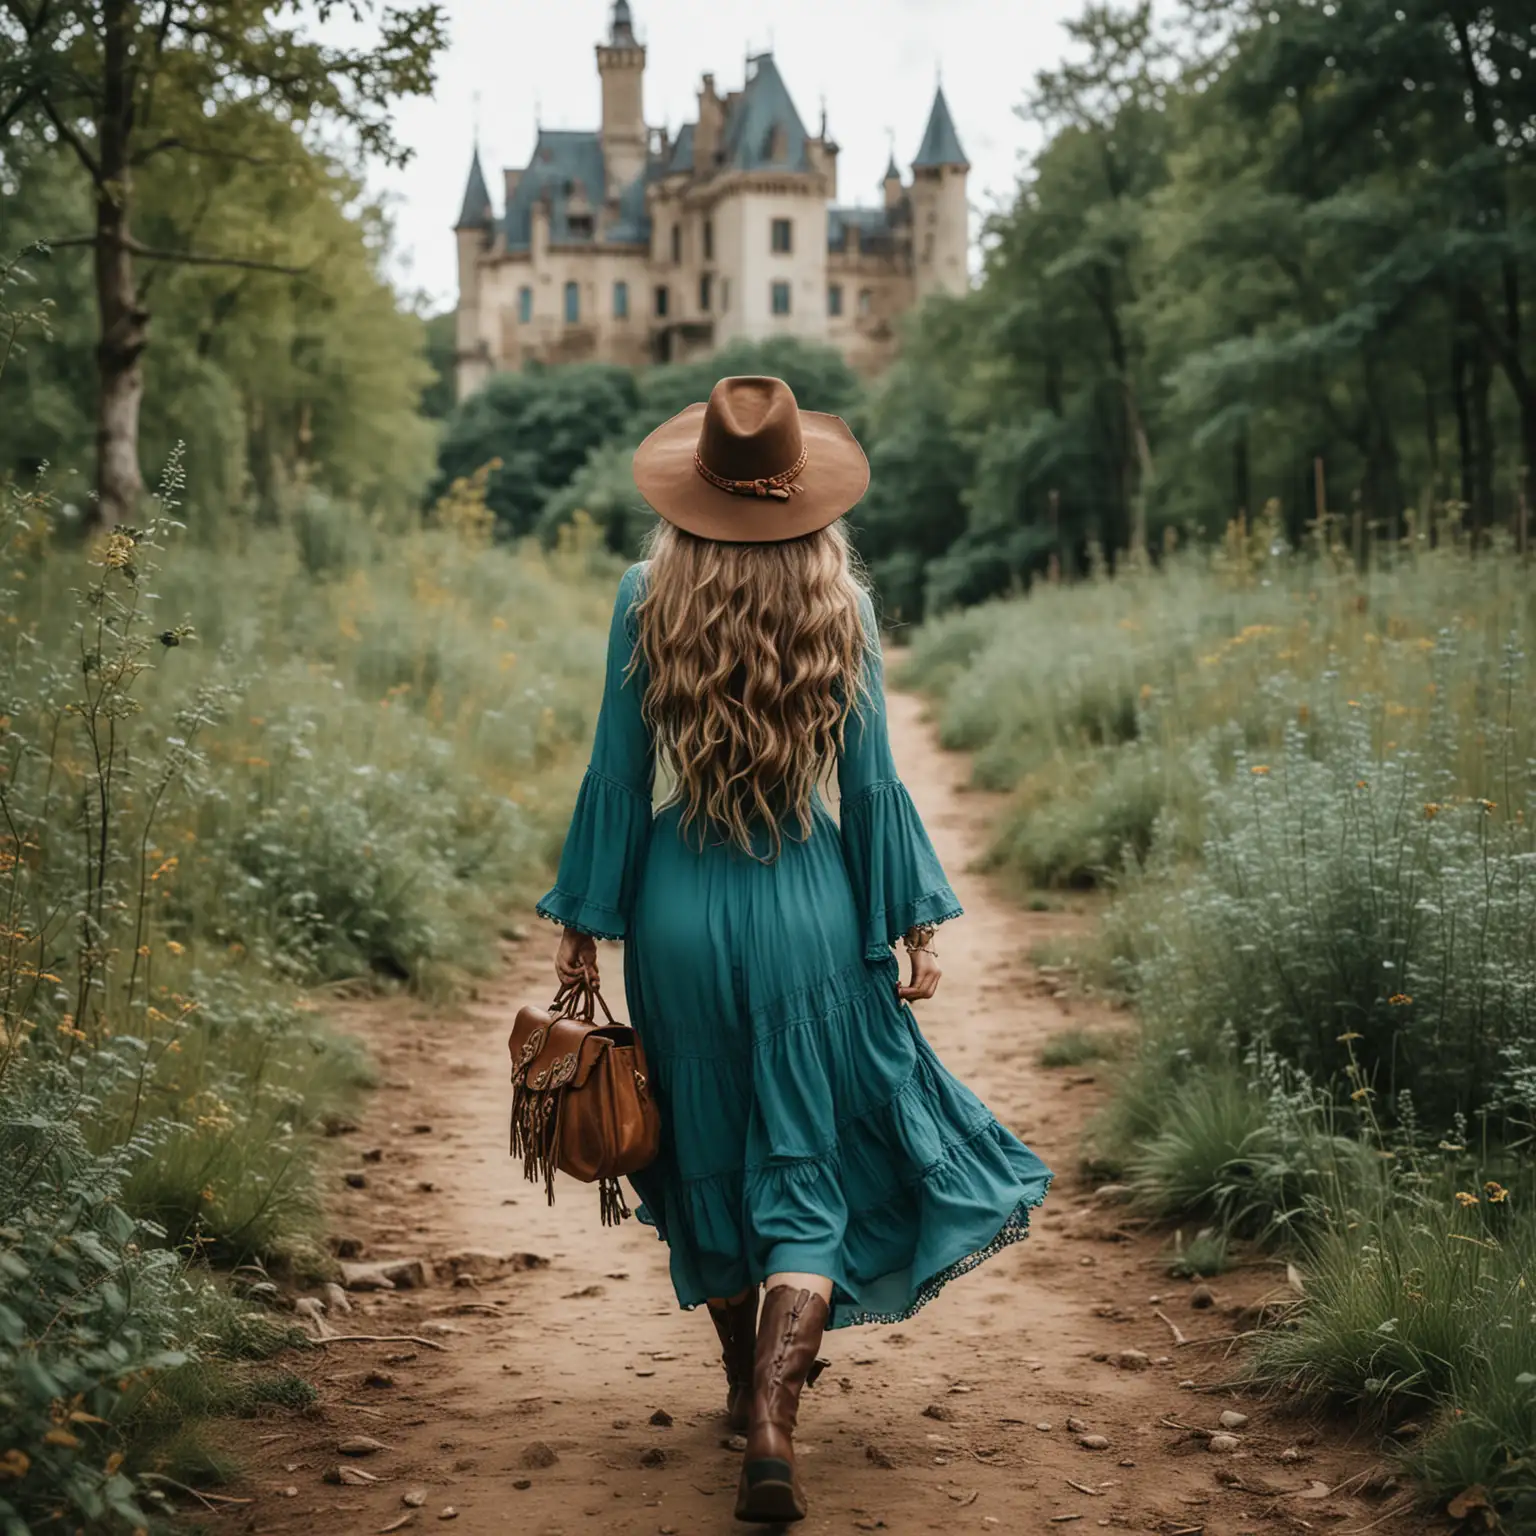 Bohemian Girl in Teal Dress Walking to Majestic Castle in Rustic Forest